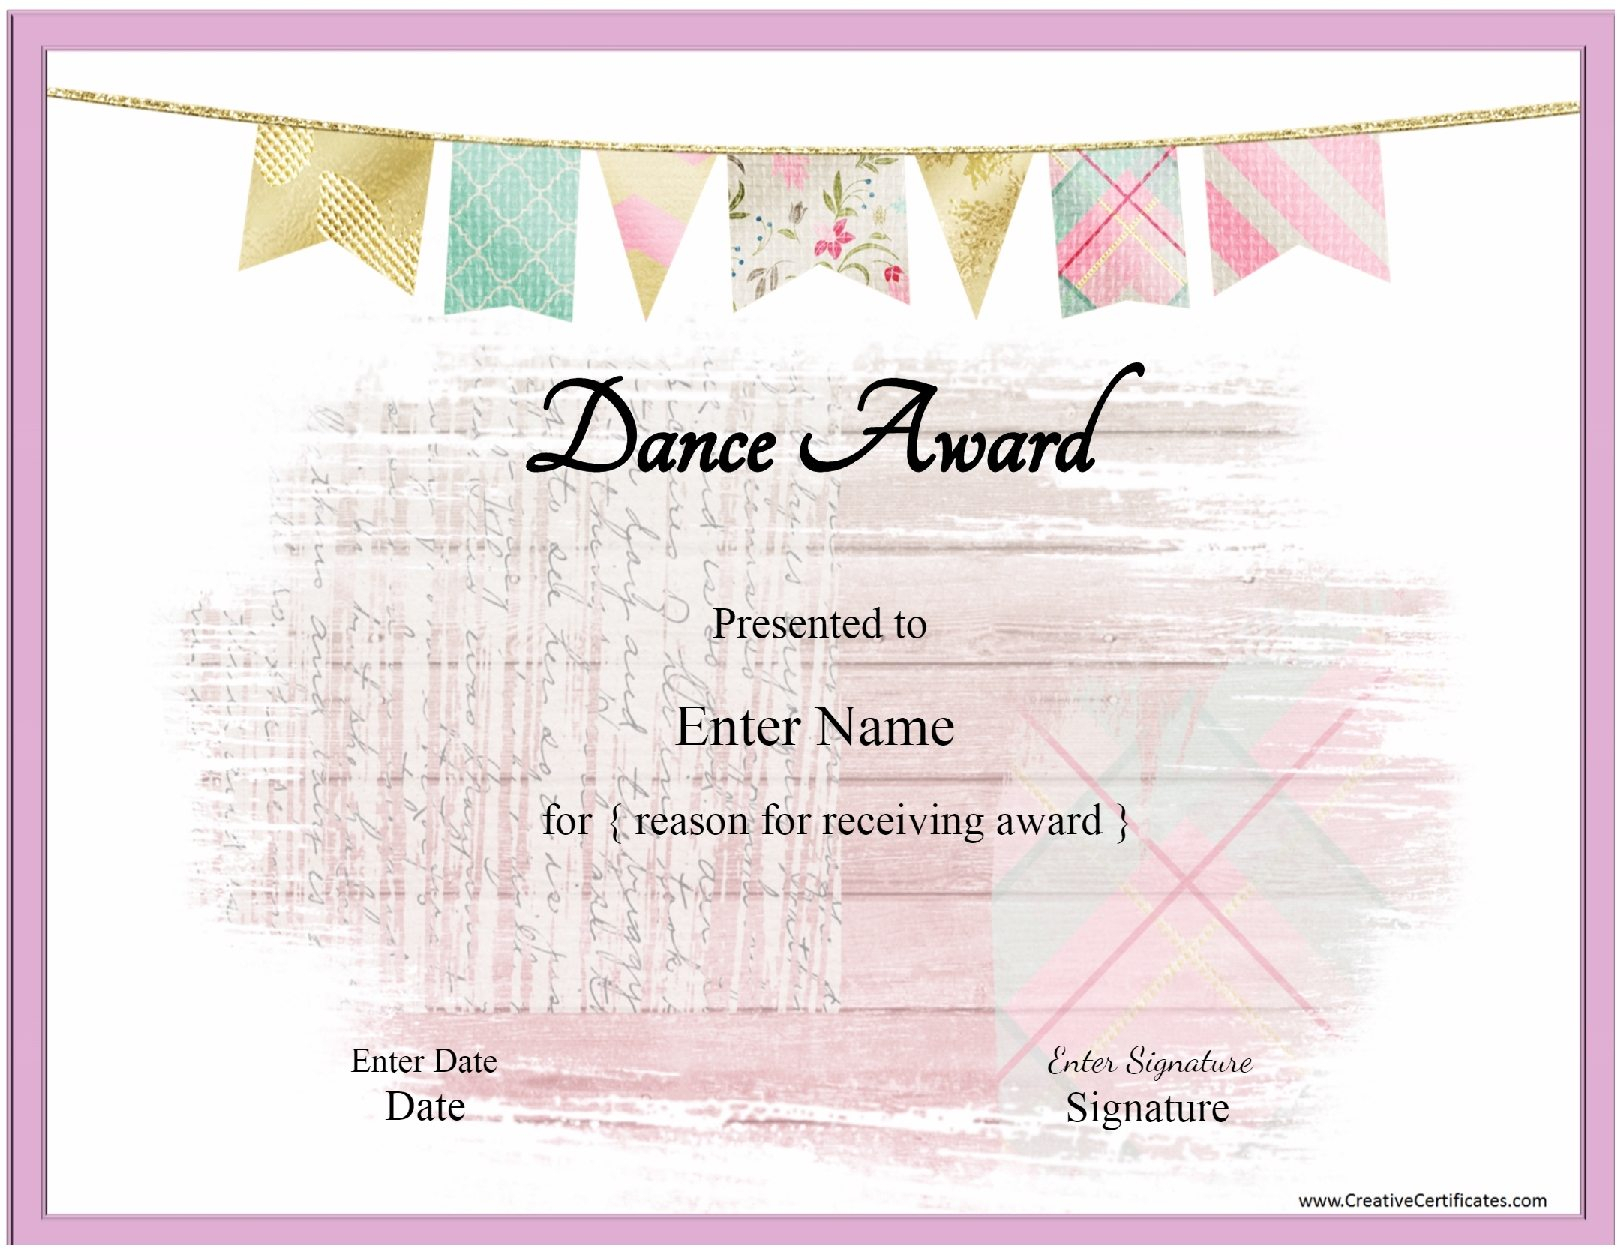 Dance Award Certificate Template - Wosing Template Design pertaining to Dance Certificate Template